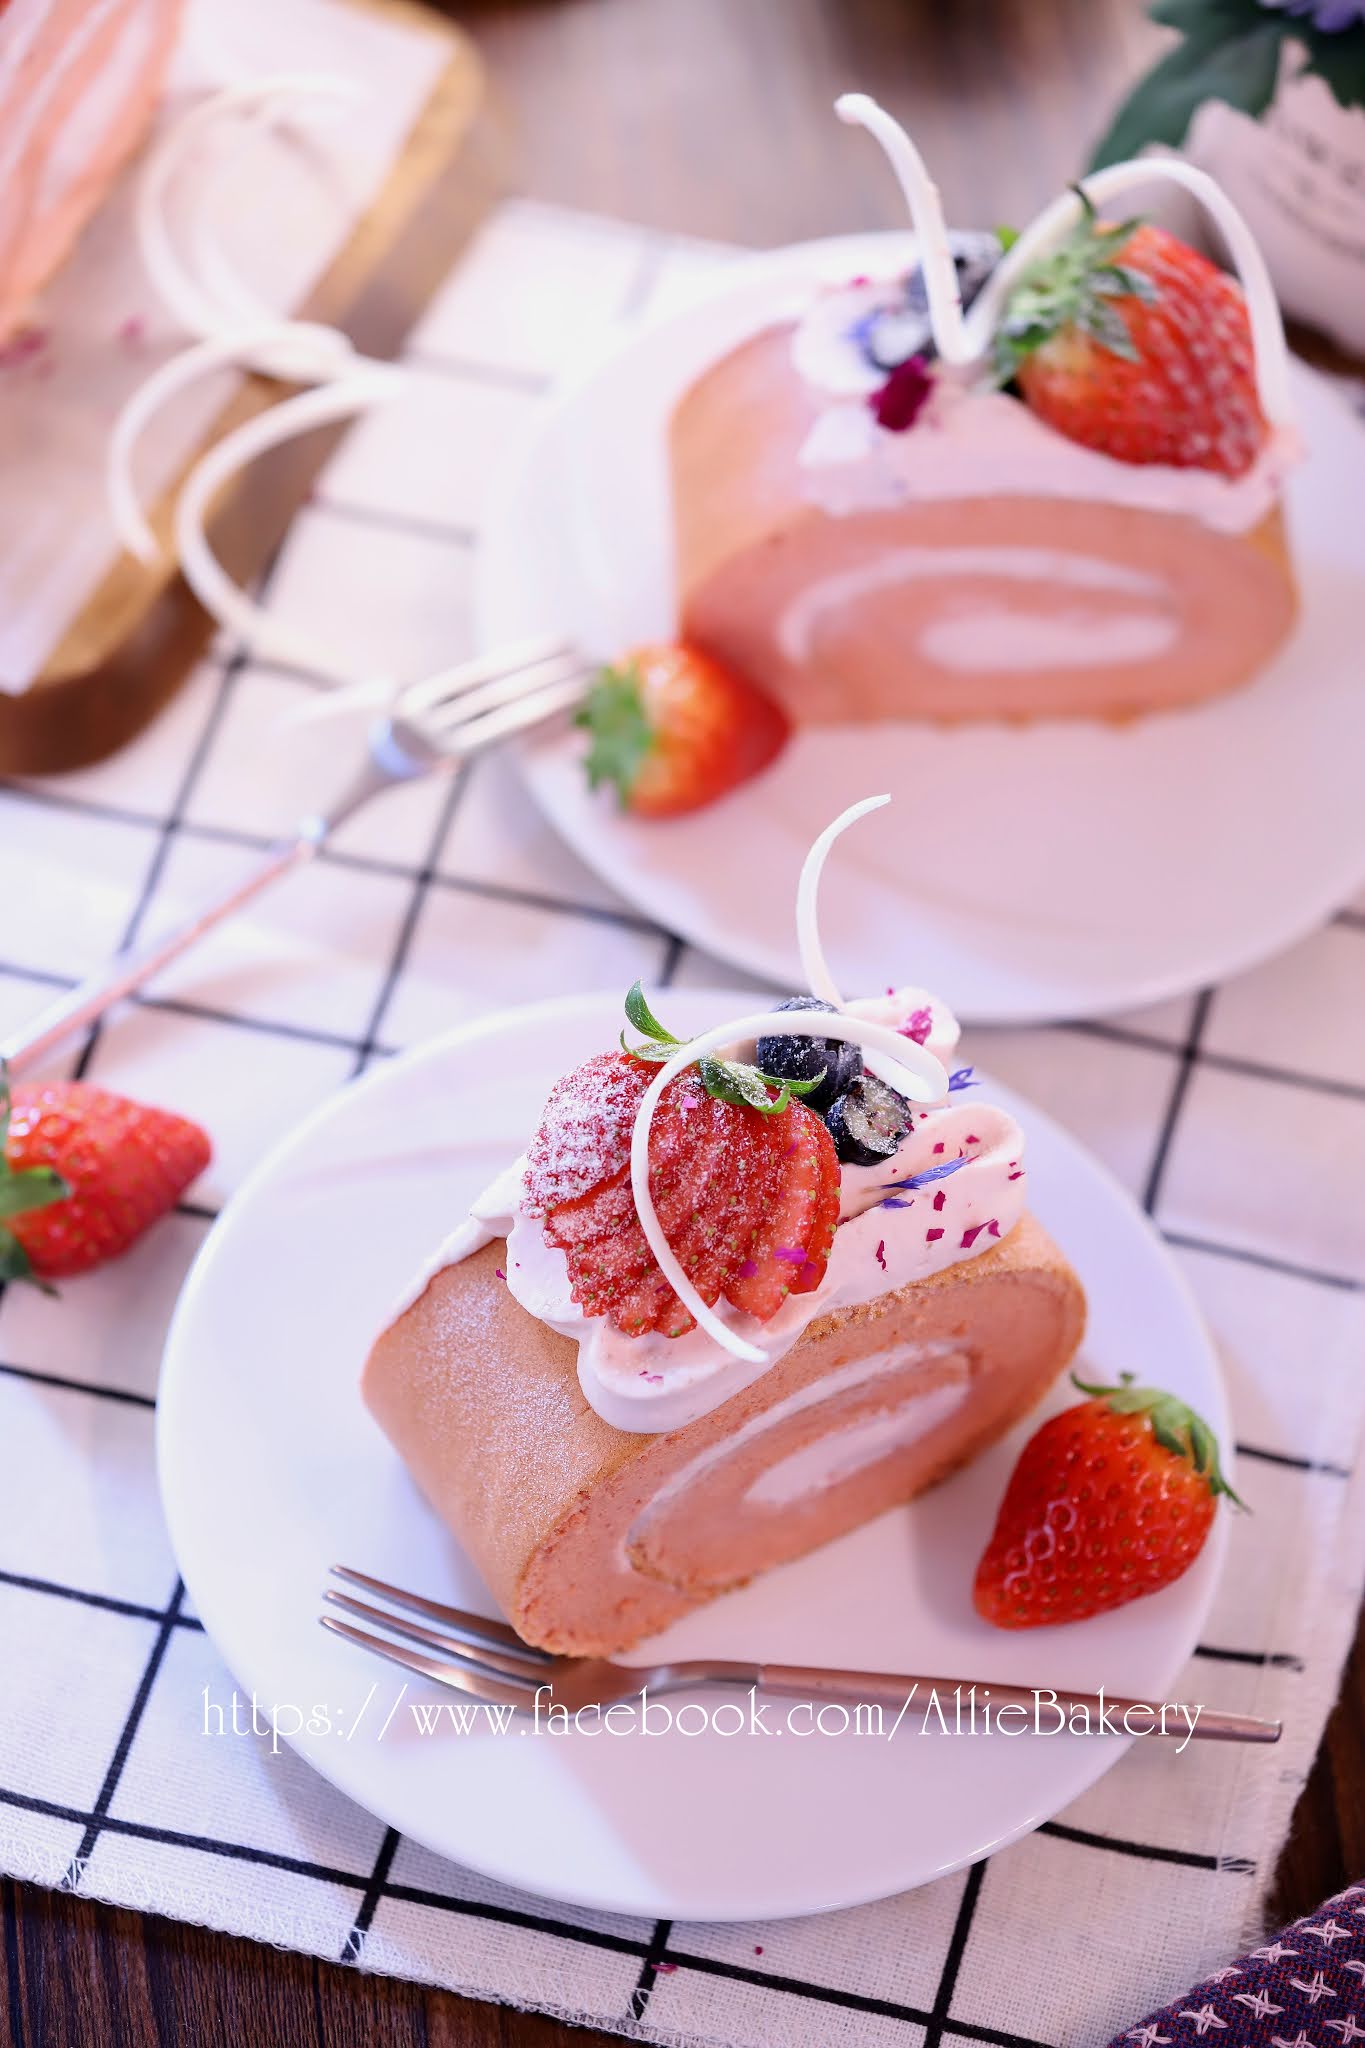 Allie's private paradise: 草莓蛋糕卷